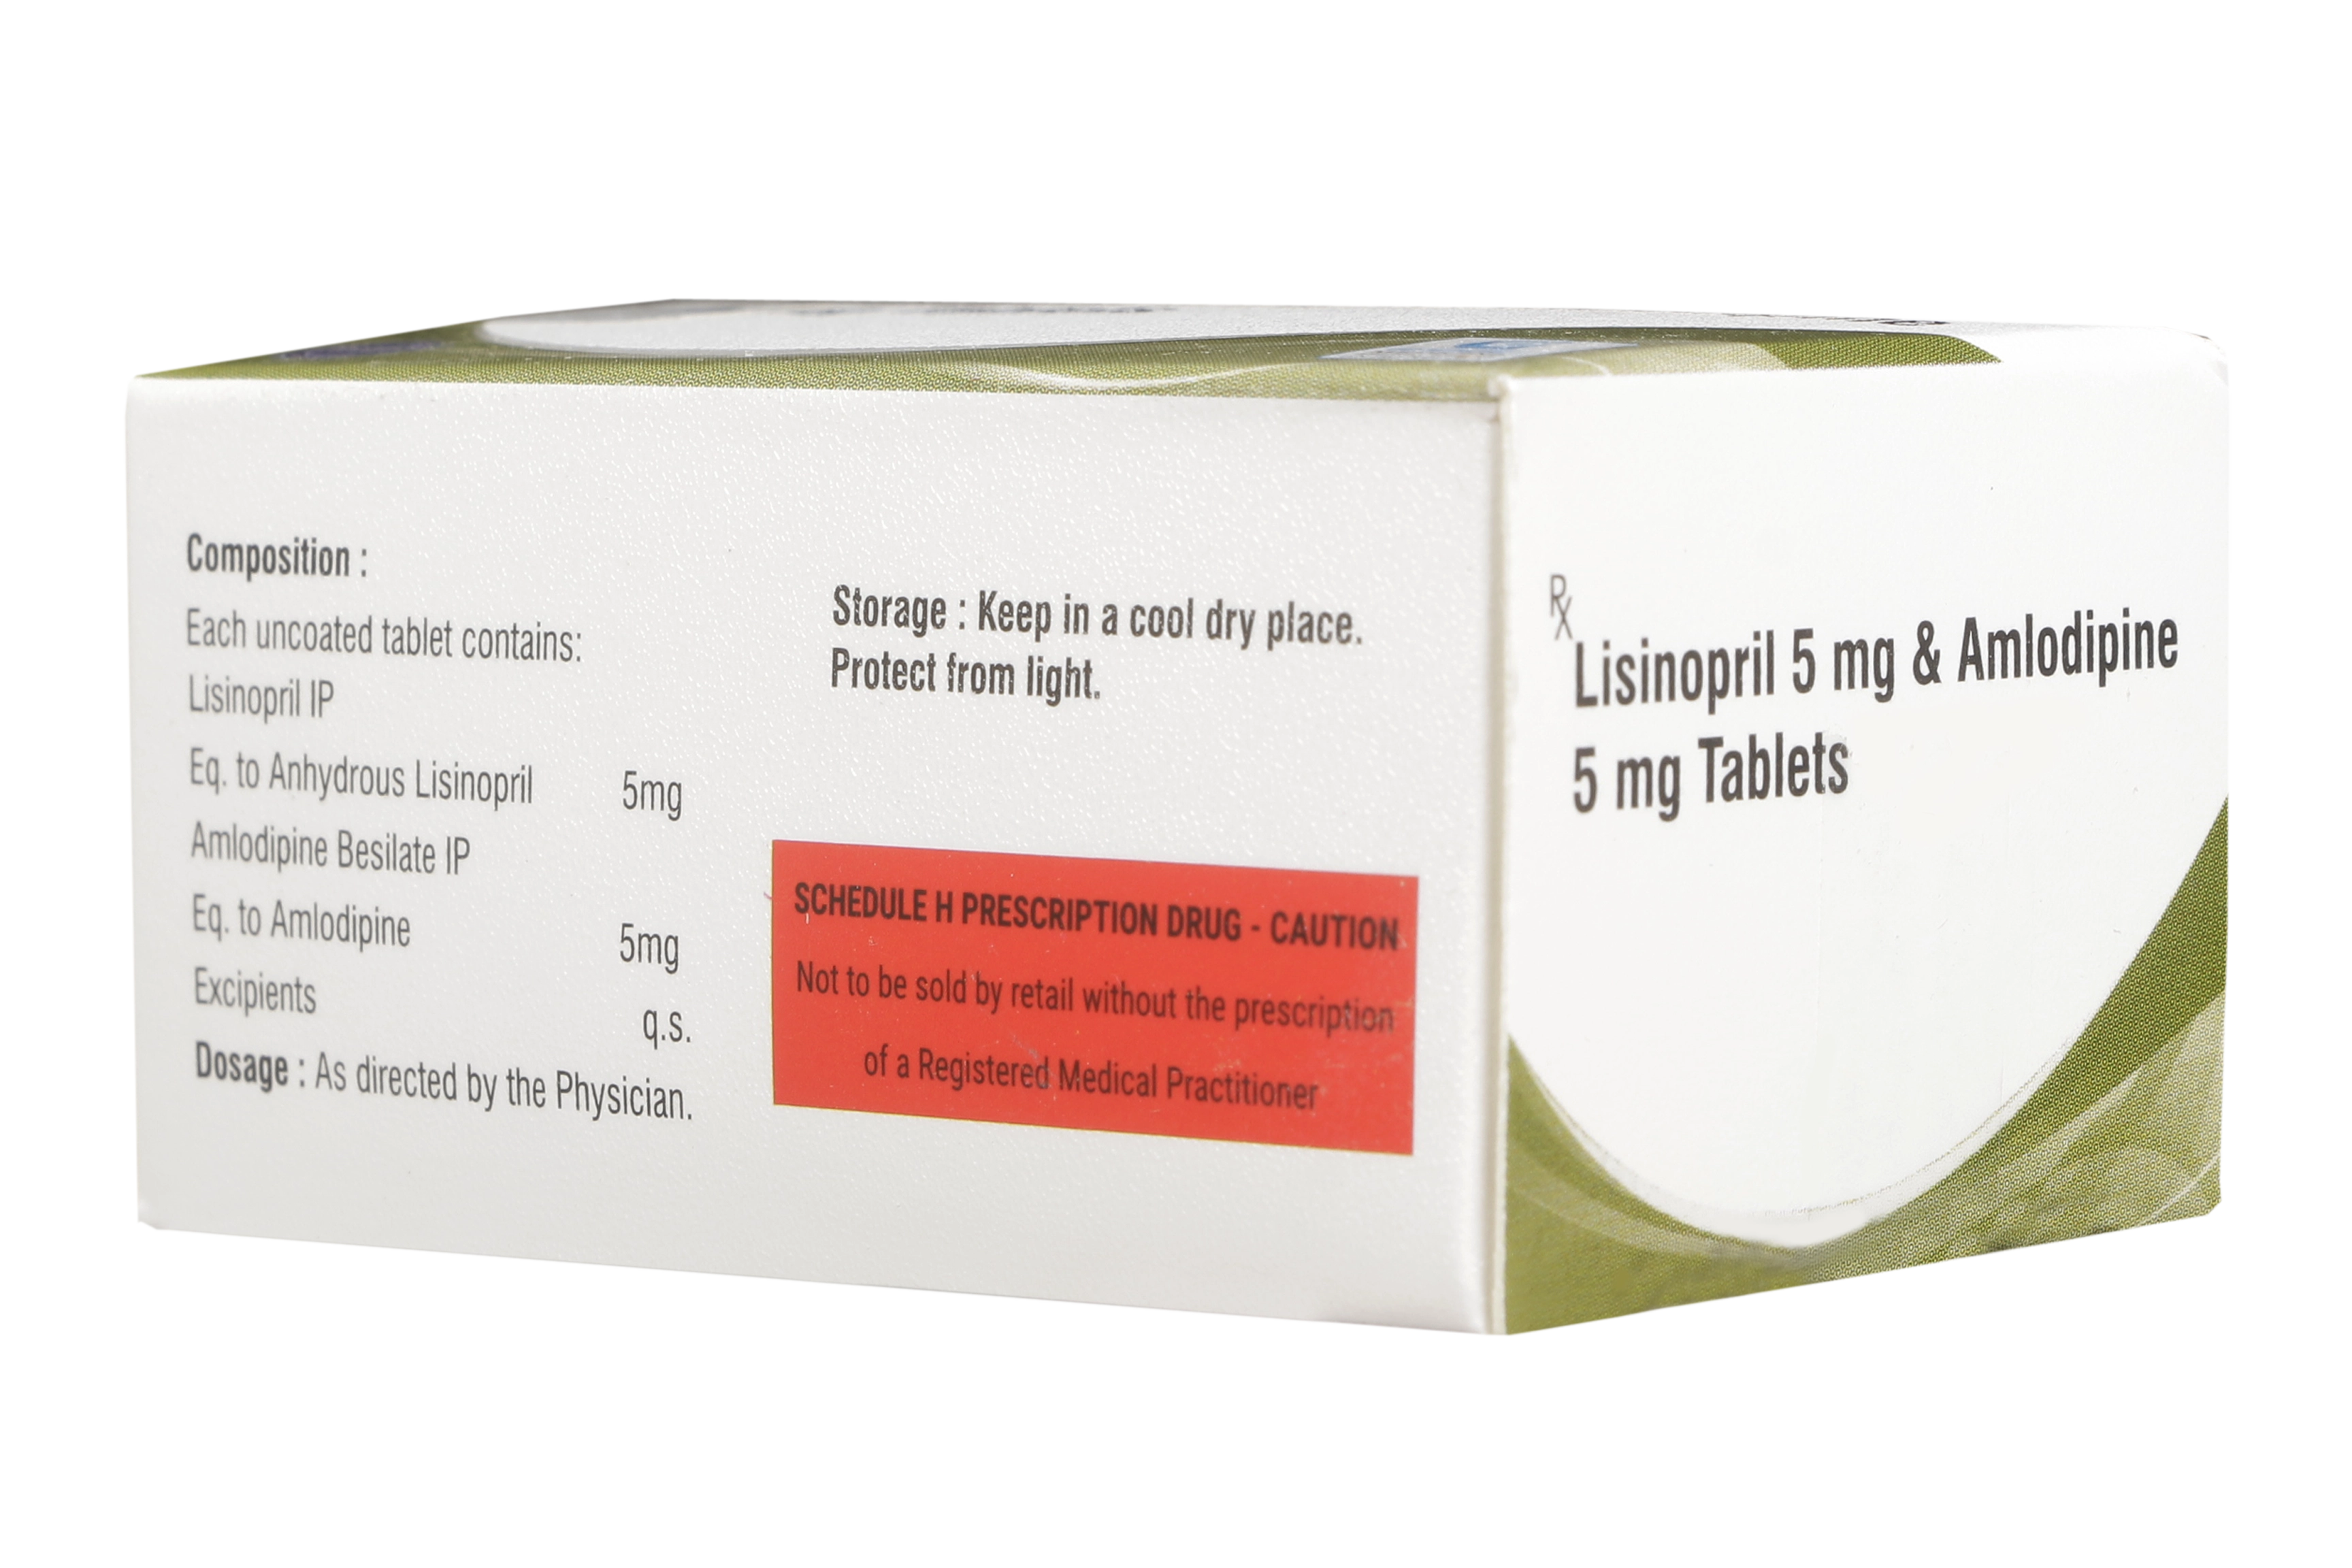 LISINOPRIL 5 MG + AMLODIPINE 5 MG - Genericart Products